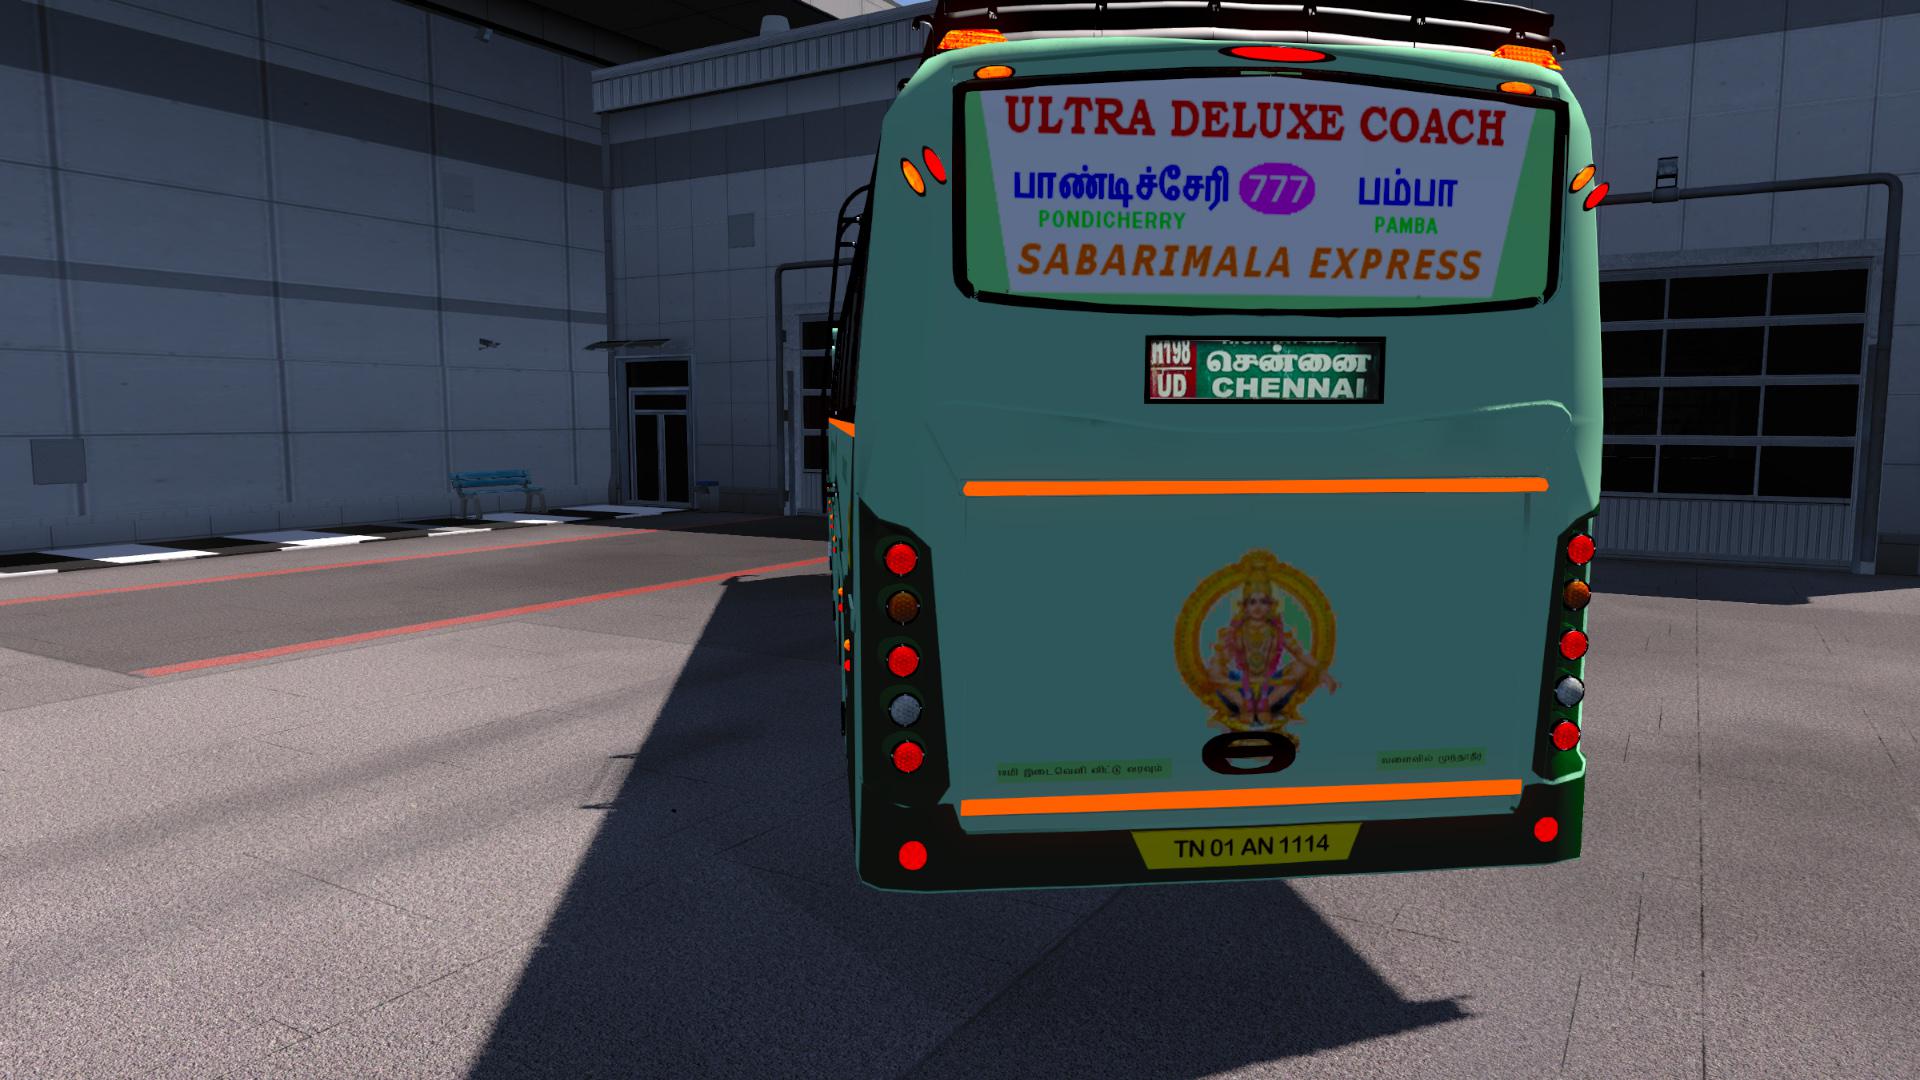 setc bus simulator game